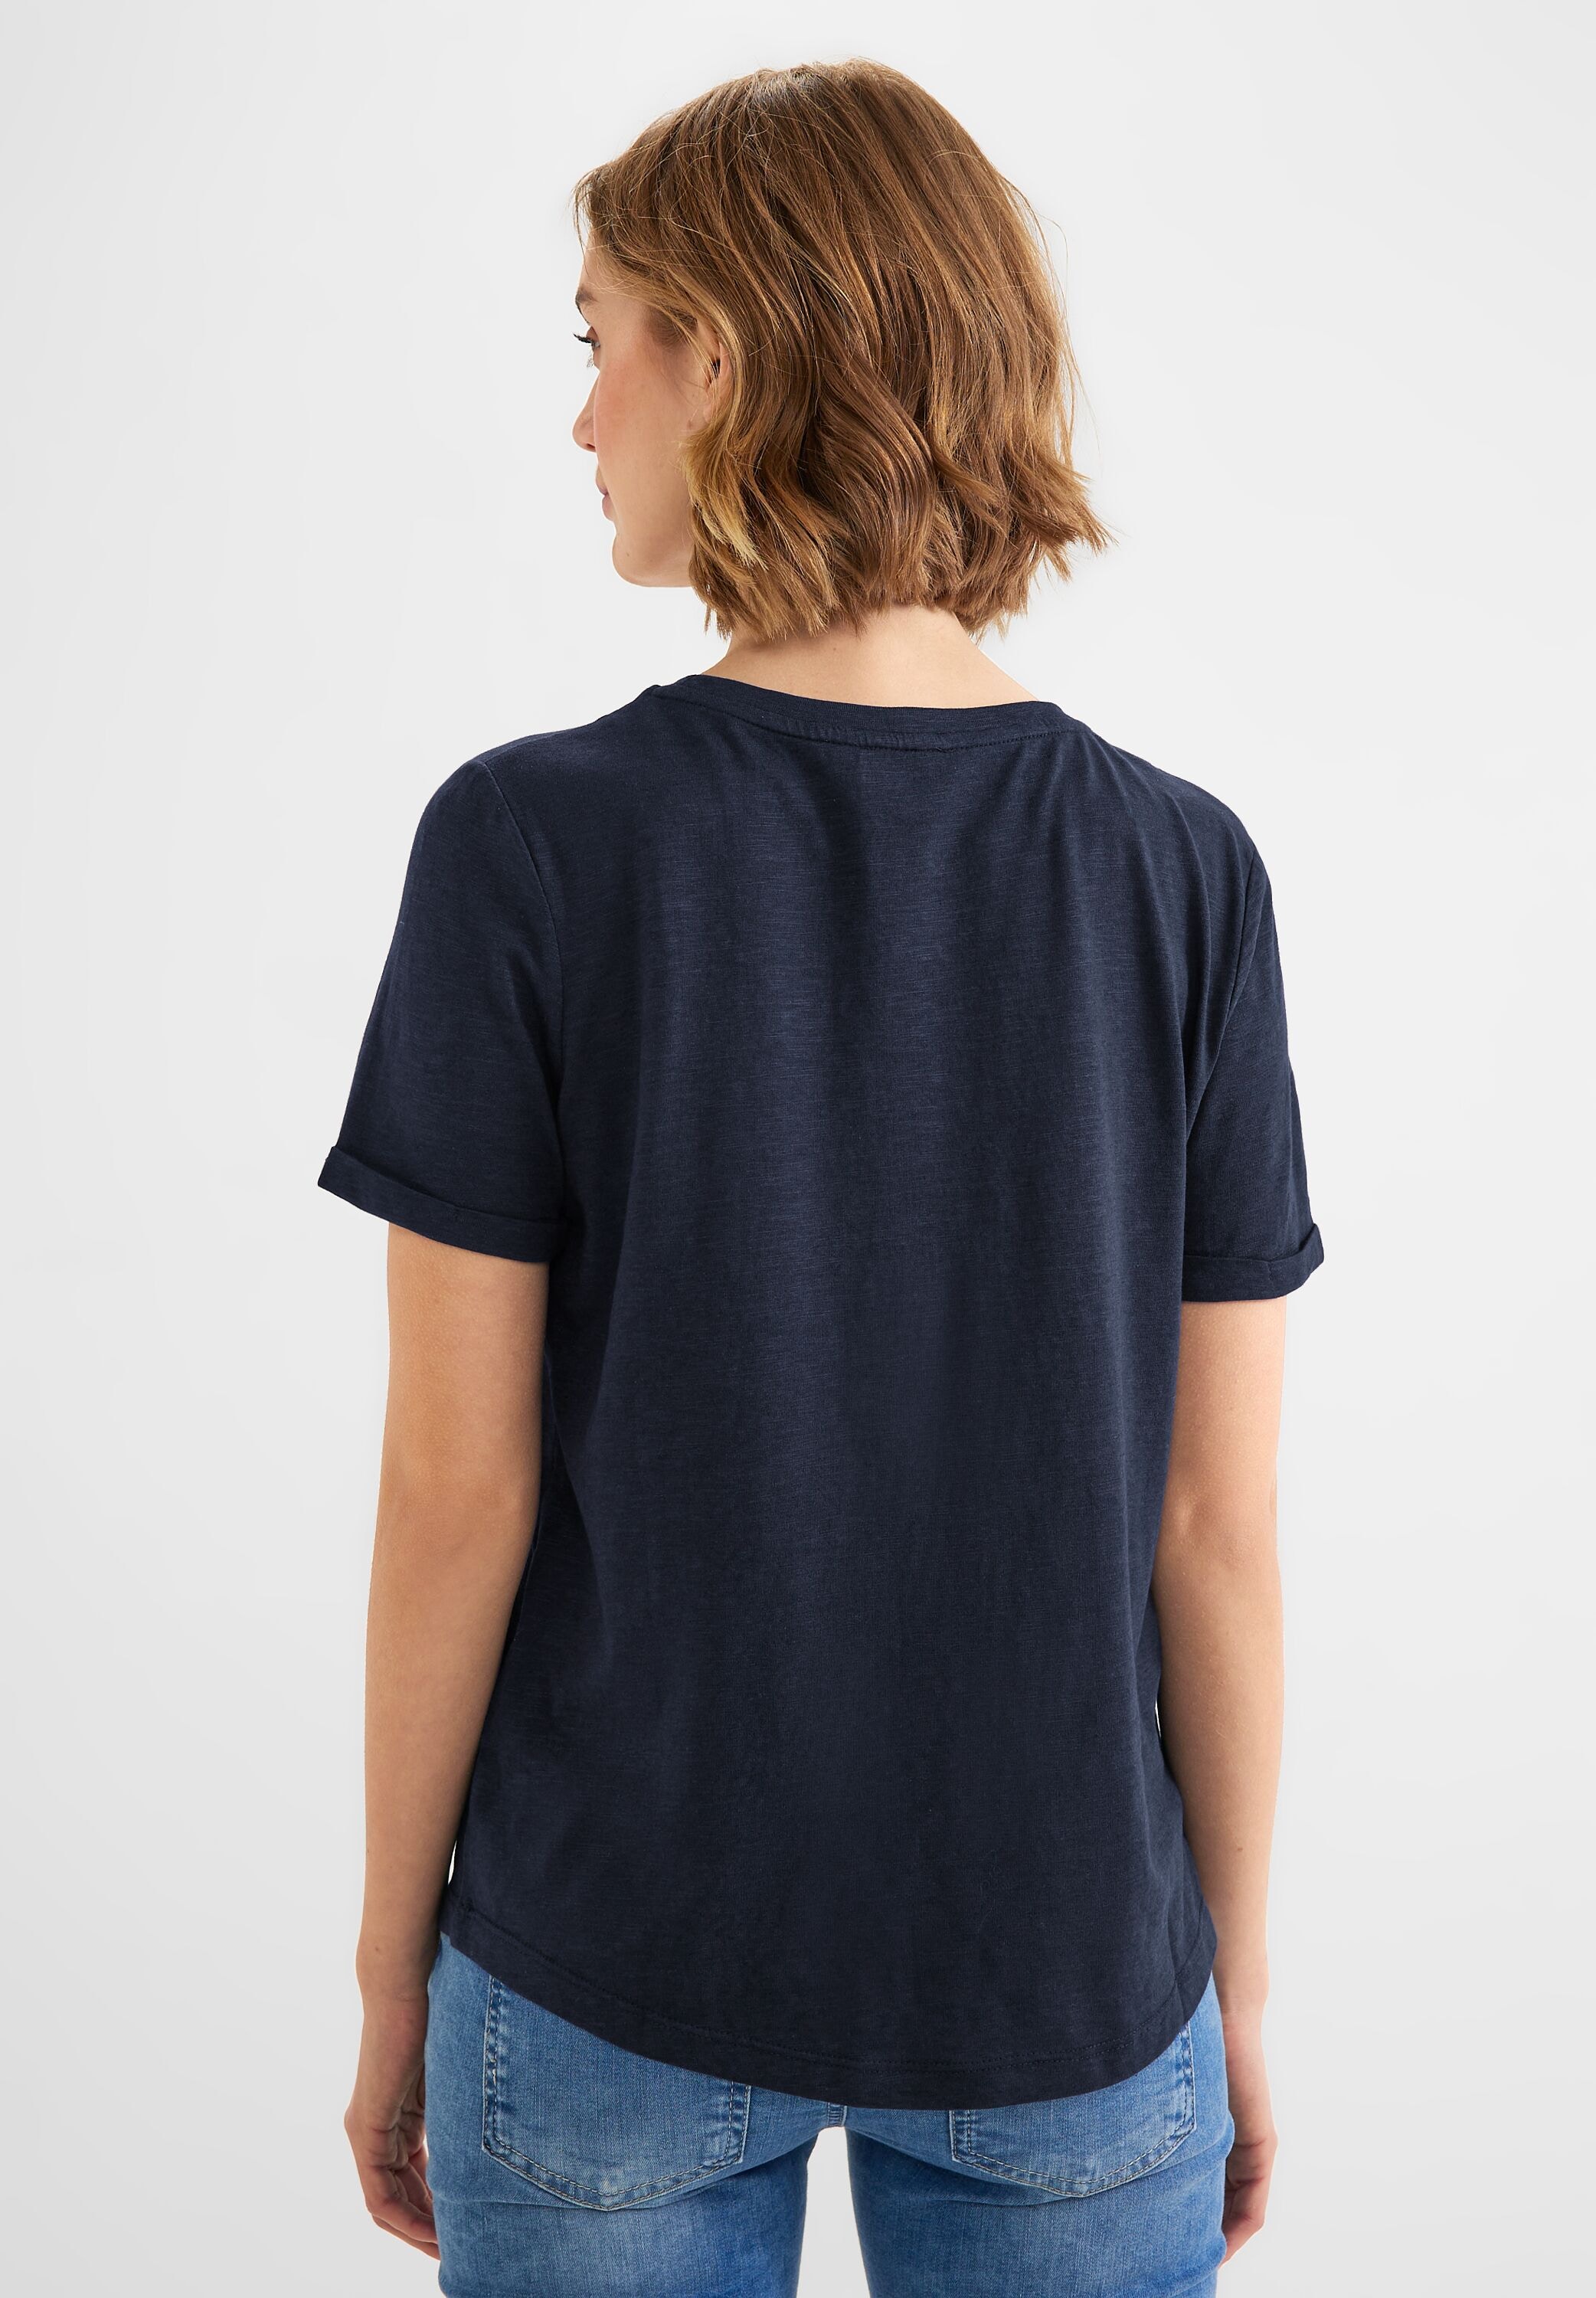 aus für STREET Materialmix BAUR softem | T-Shirt, ONE bestellen